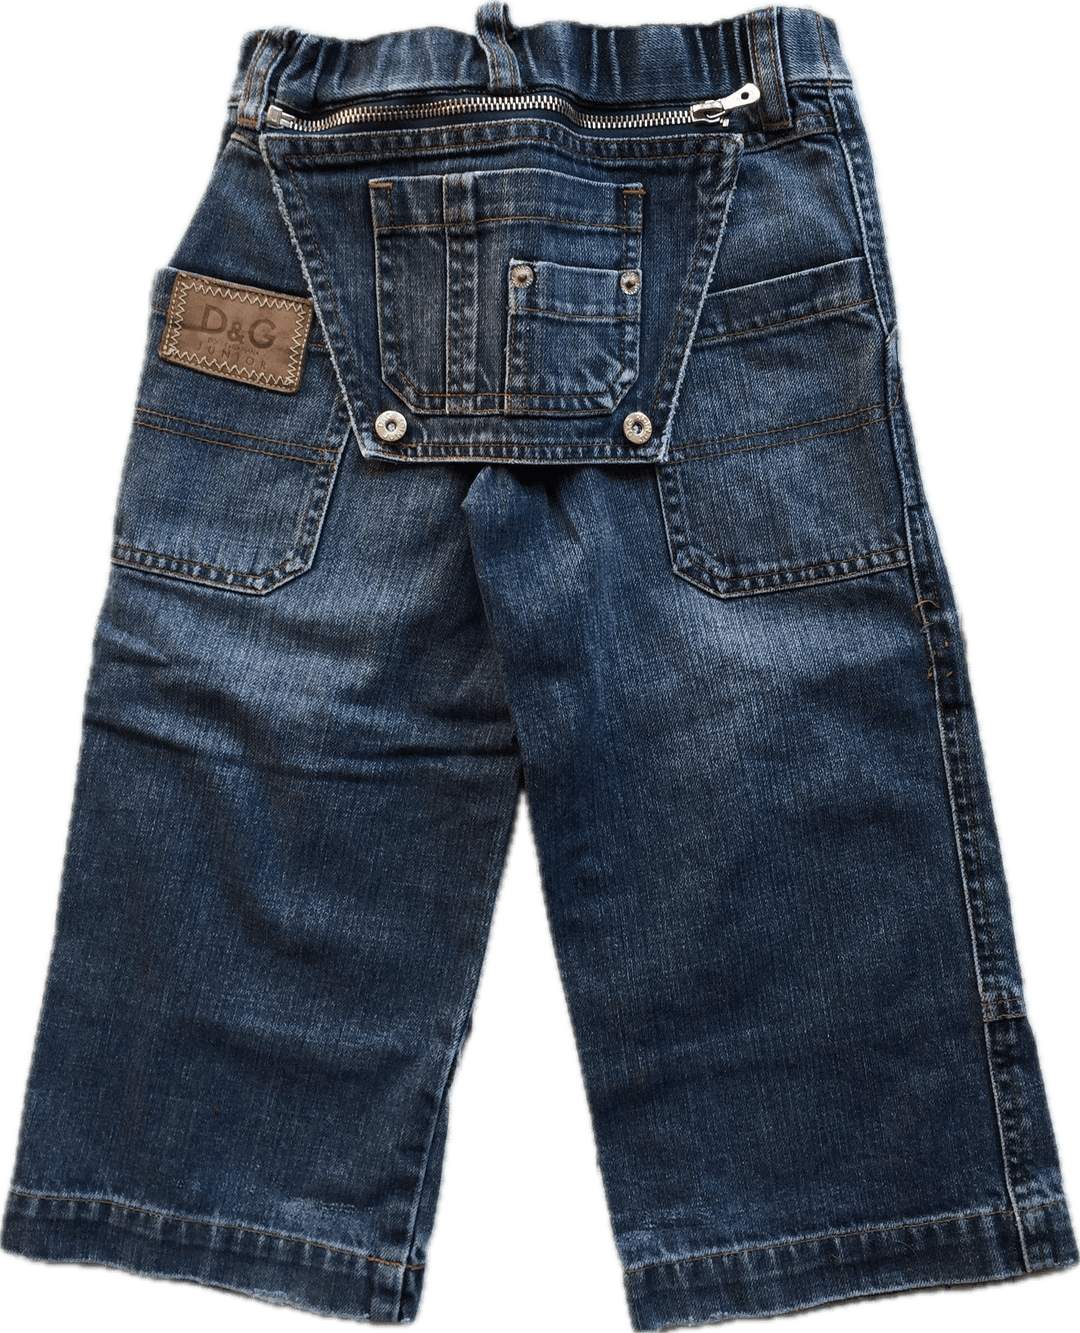 Dolce & Gabbana Wide Leg Jeans - Size 3 - Jean Pool